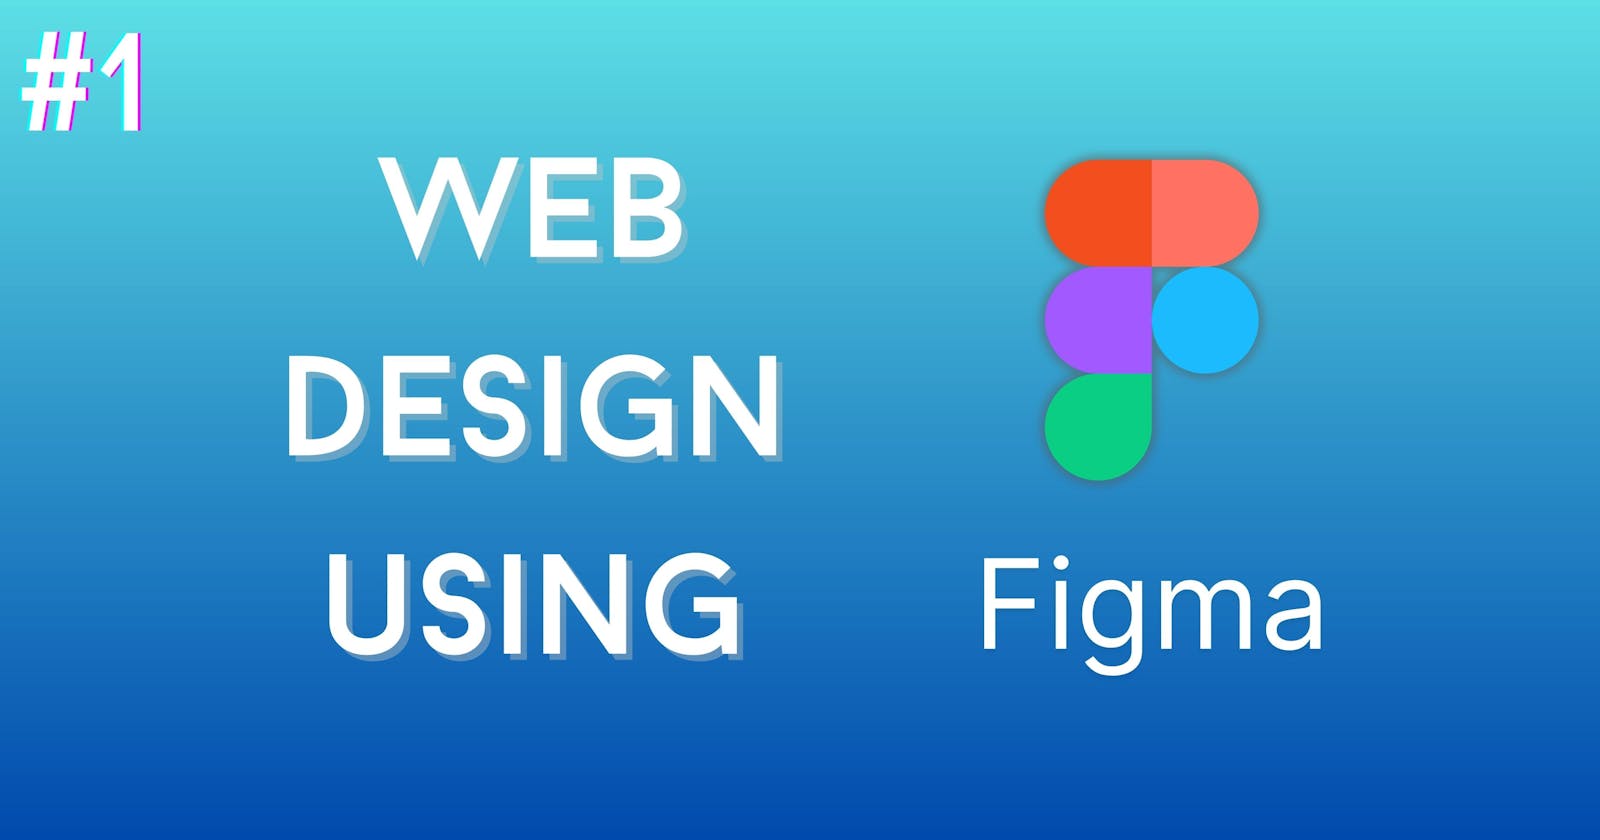 Web Design using Figma - Part 1